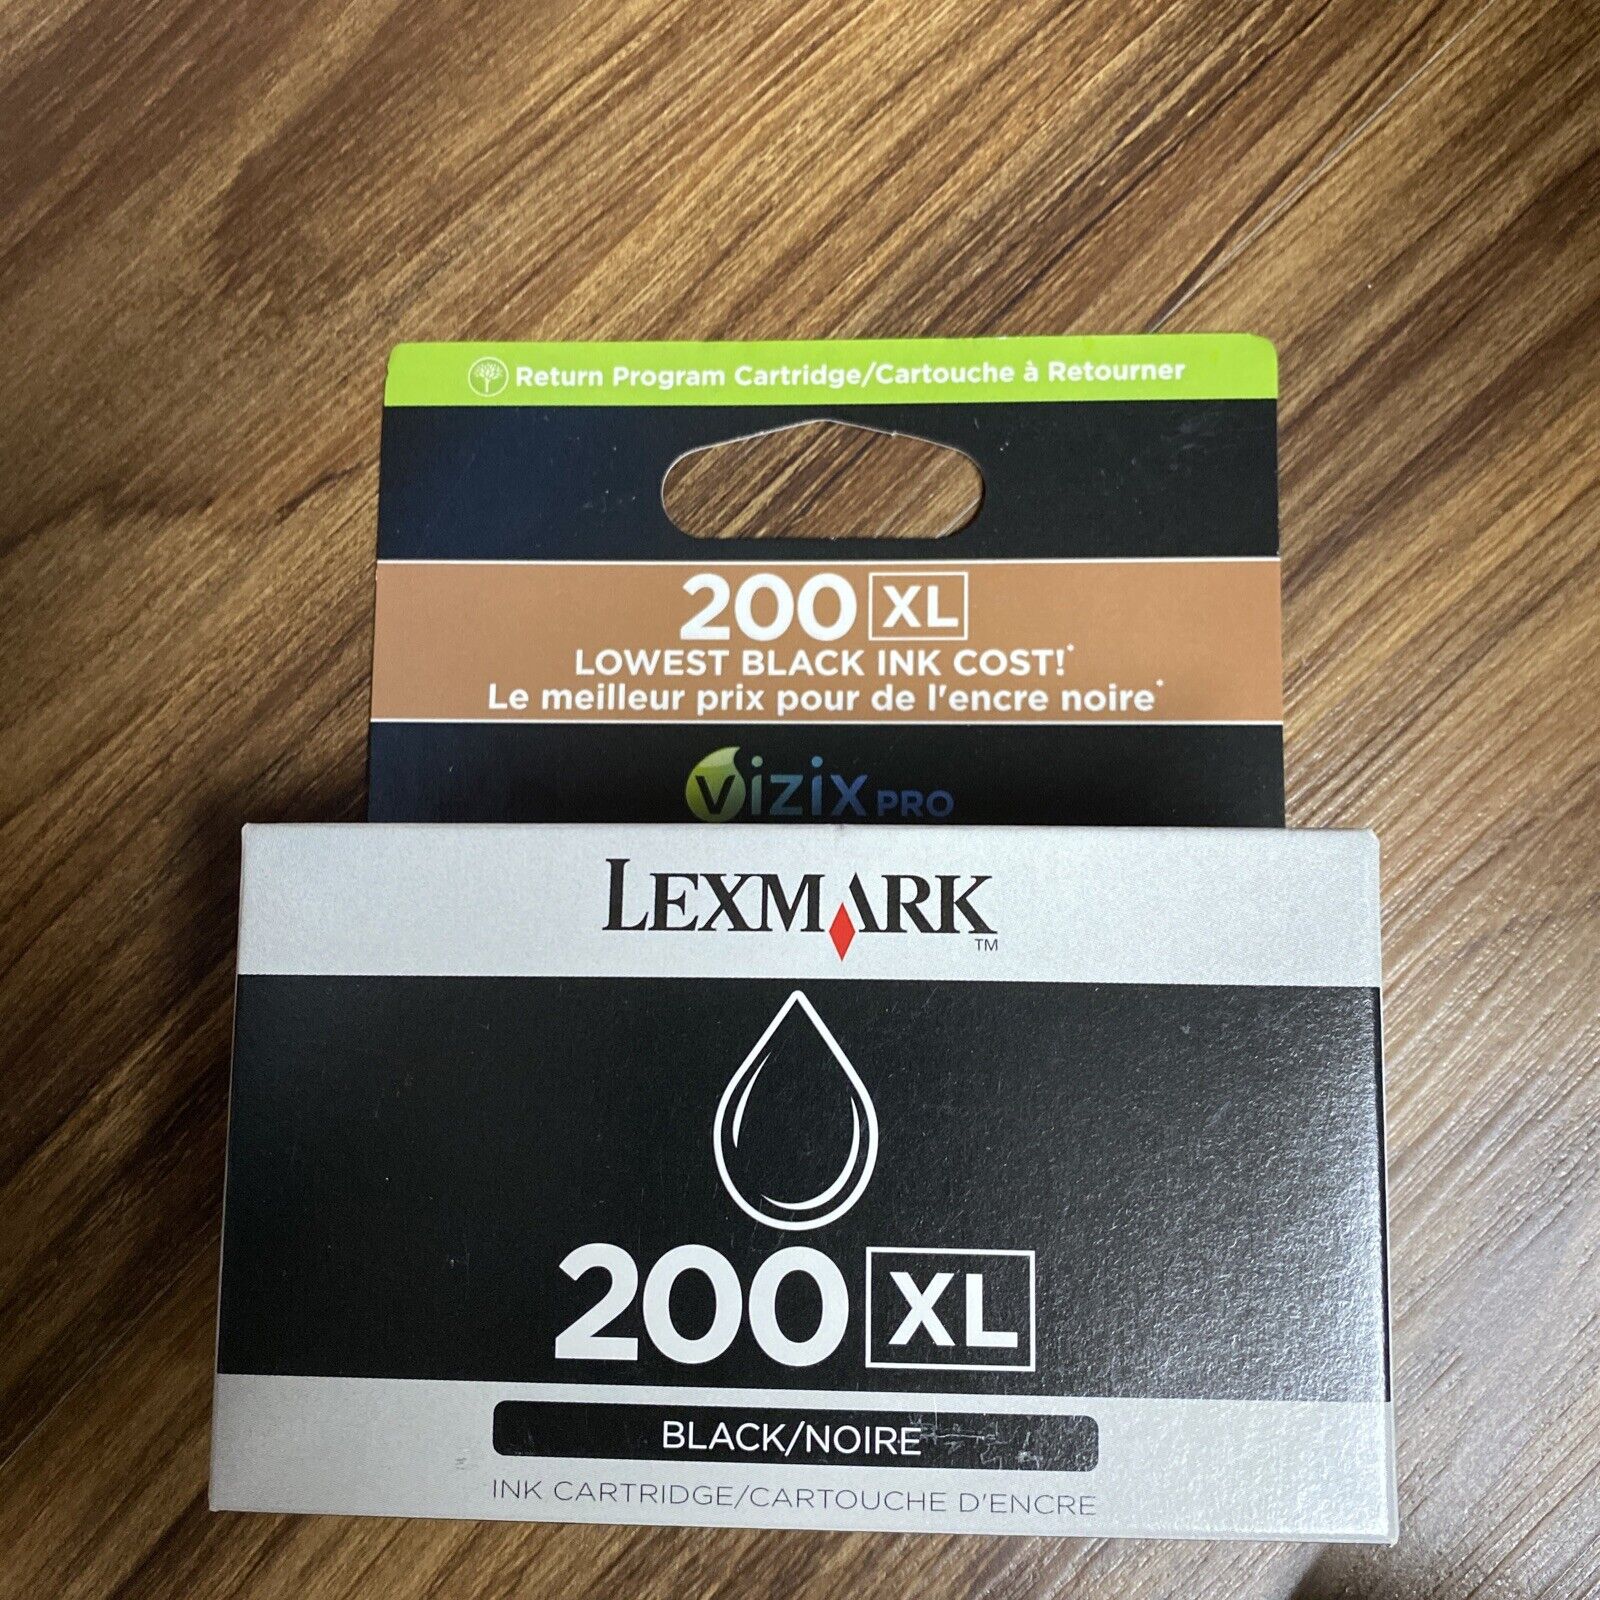 LEXMARK 200XL BLACK INK CARTRIDGE FOR LEXMARK PRO 4000 / 5500 GENUINE / NEW